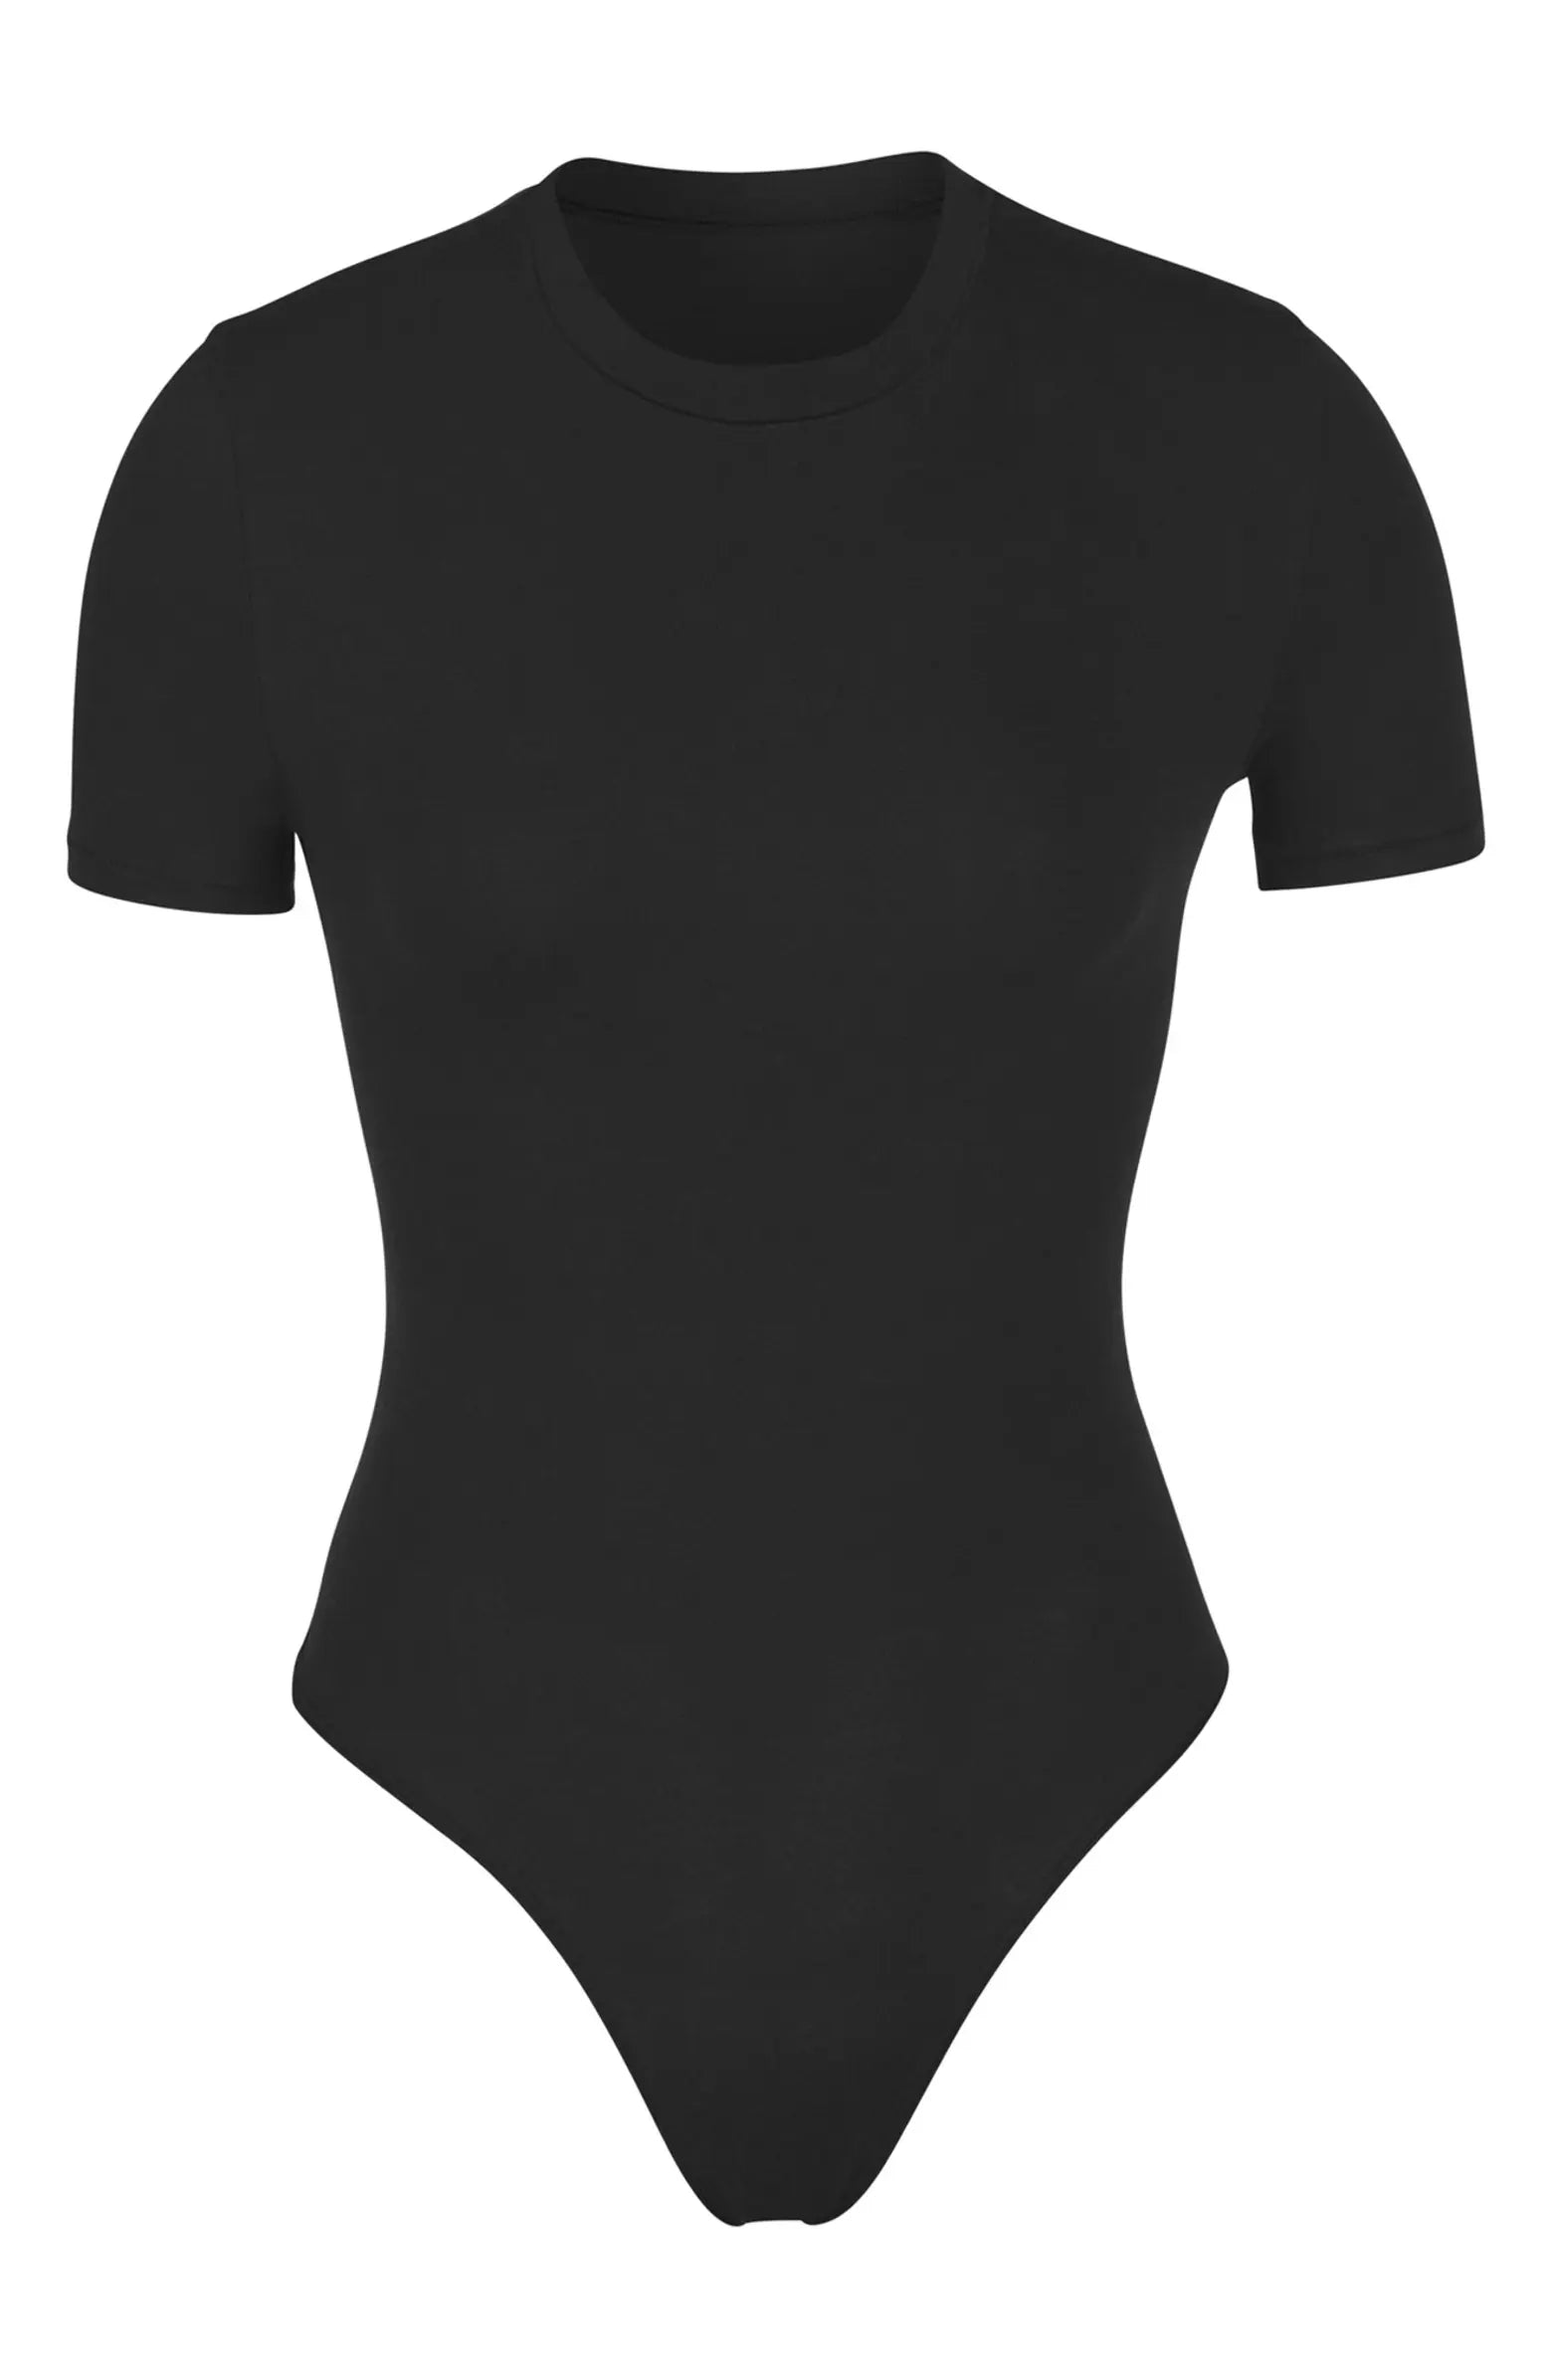 Skims Outdoor Basics Bodysuit Size: Medium